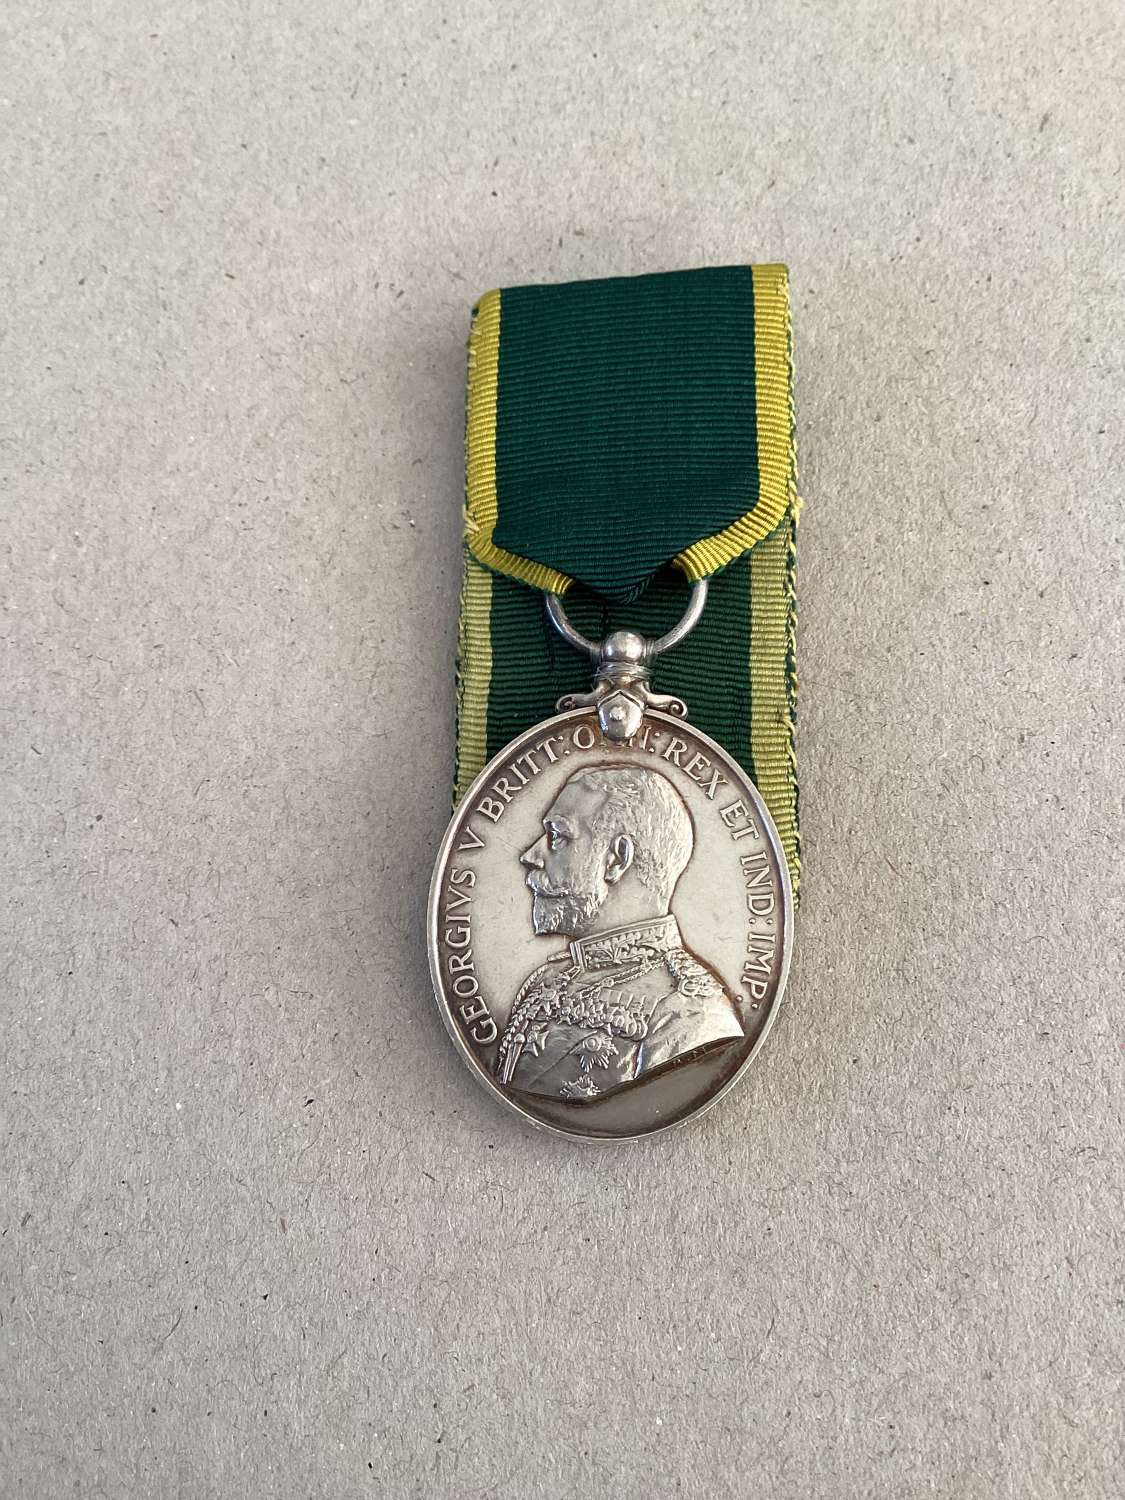 Territorial Efficiency Medal GV named (330020 Sjt C B C Hunter 9-HLI).